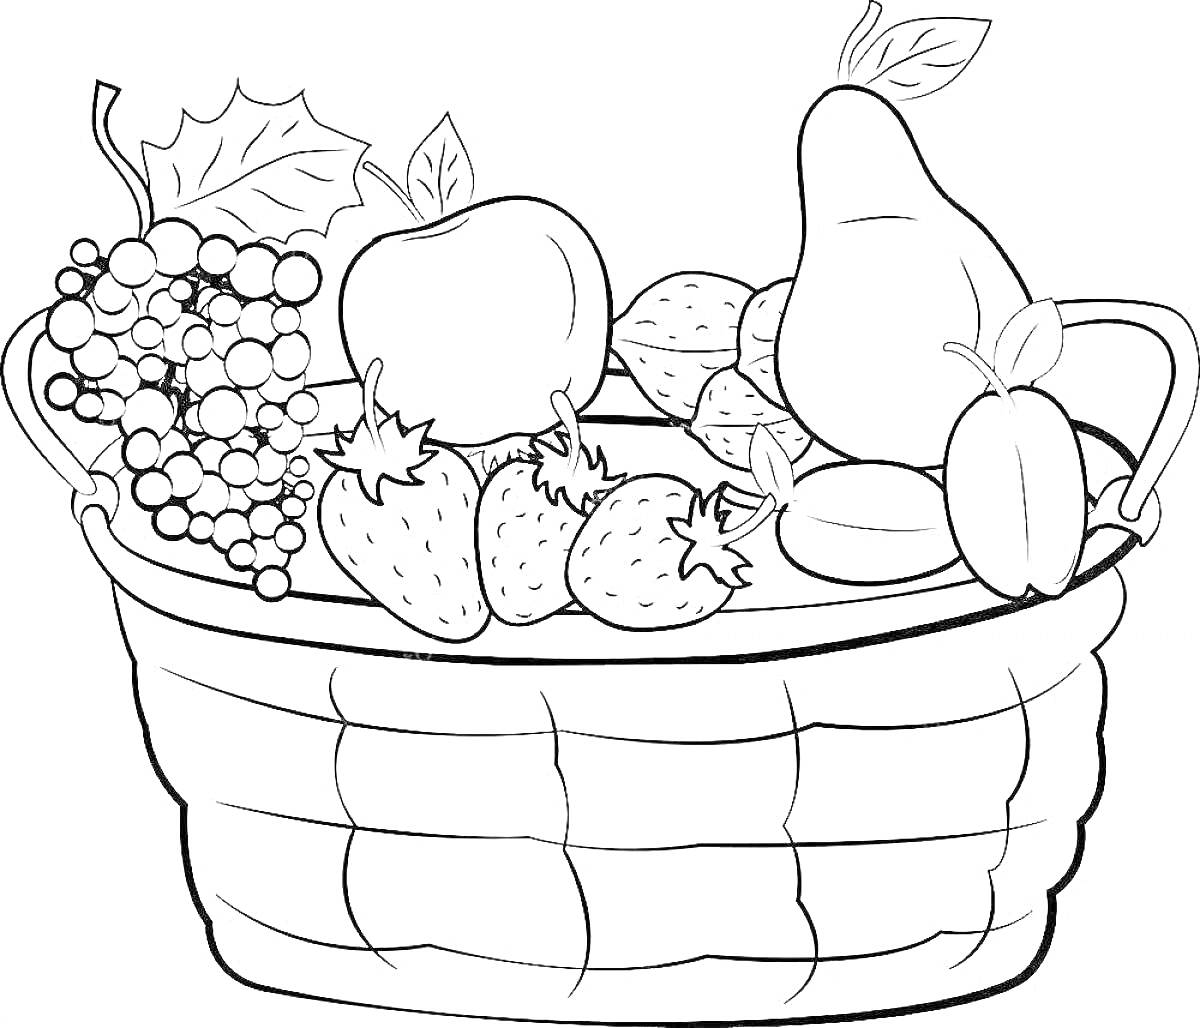 На раскраске изображено: Фрукты, Овощи, Корзина, Виноград, Яблоко, Клубника, Слива, Еда, Овощи и фрукты